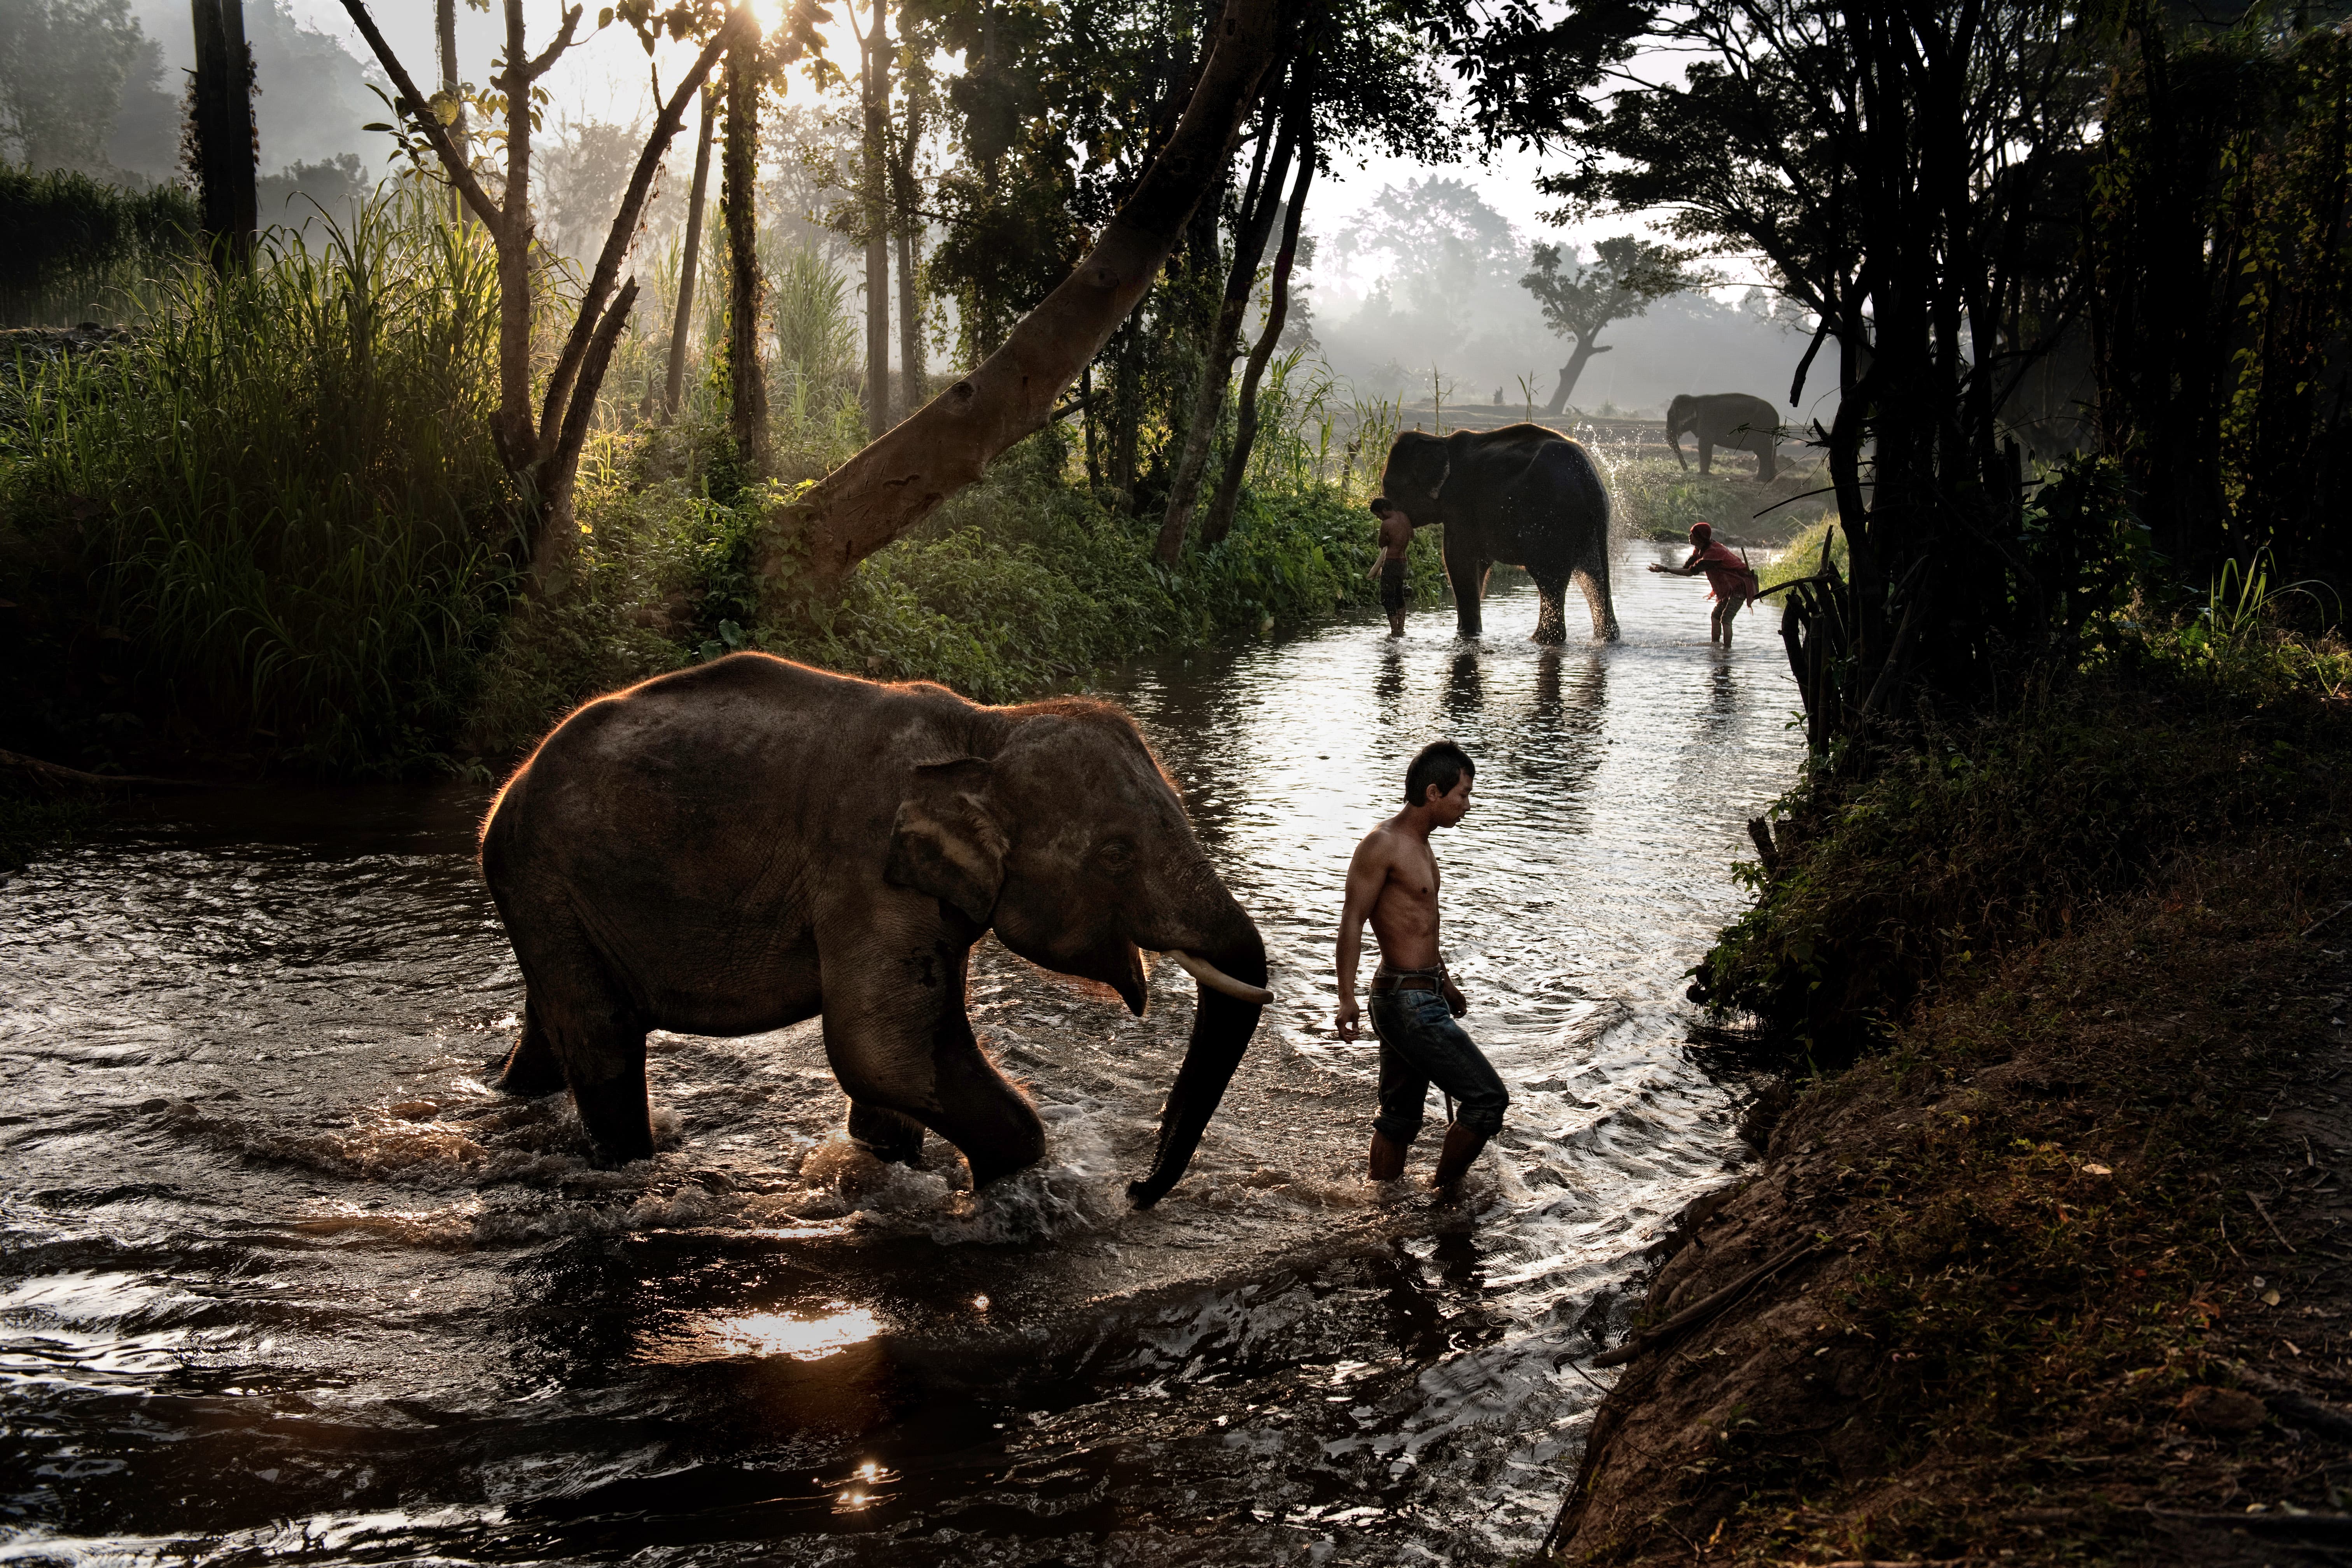 Thailand. 2010. Boy and elephant crossing a stream. ©Steve McCurry / Magnum Photos